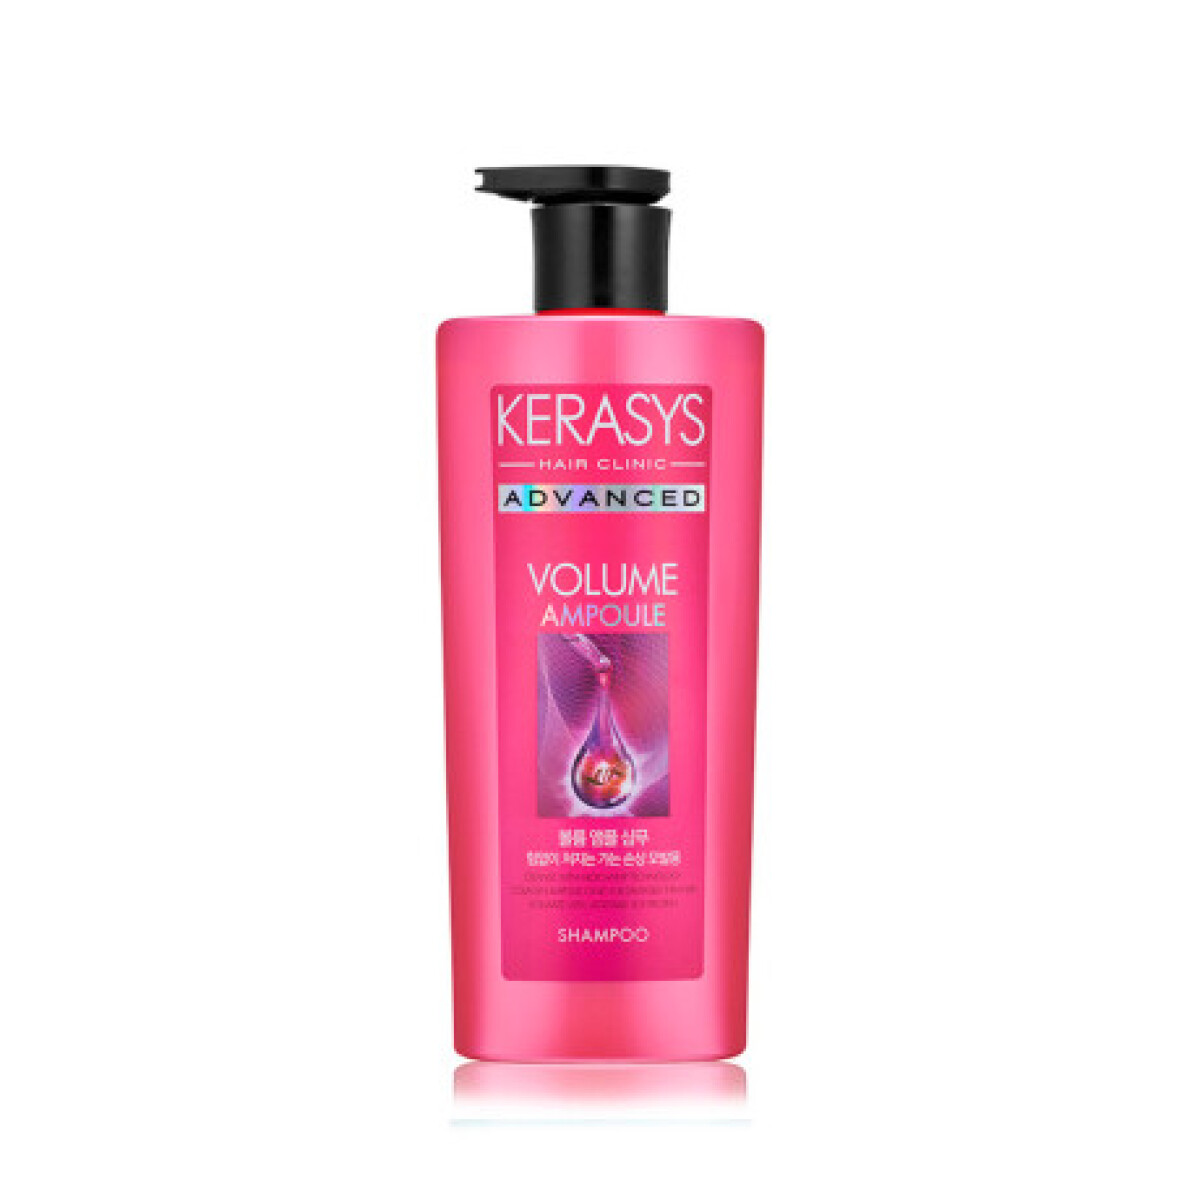 Kerasys Advanced Volume Ampoule shampoo 600ml 